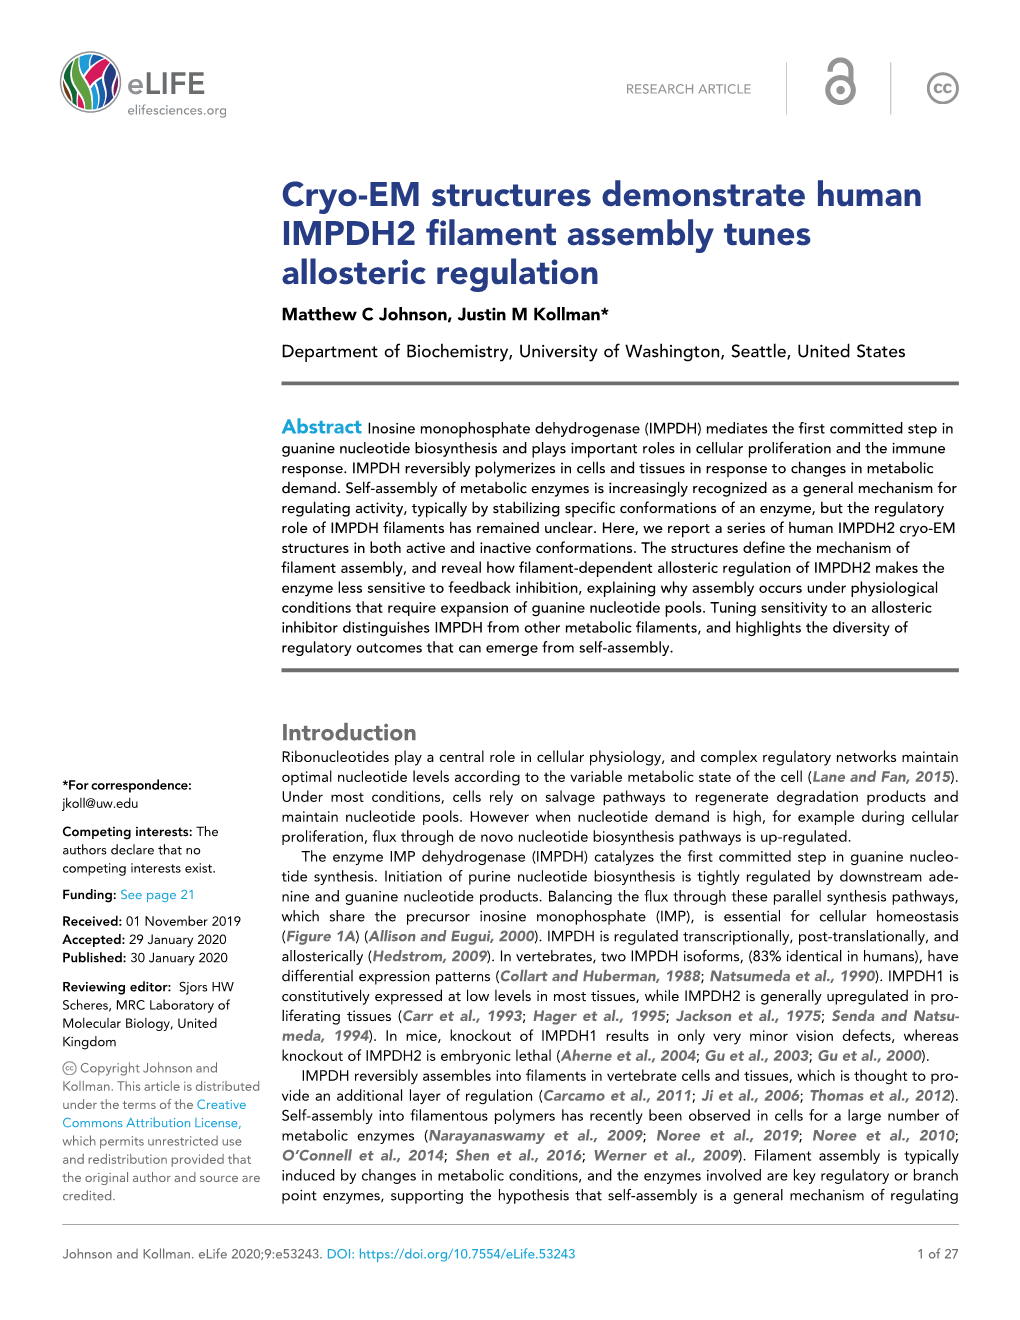 Cryo-EM Structures Demonstrate Human IMPDH2 Filament Assembly Tunes Allosteric Regulation Matthew C Johnson, Justin M Kollman*